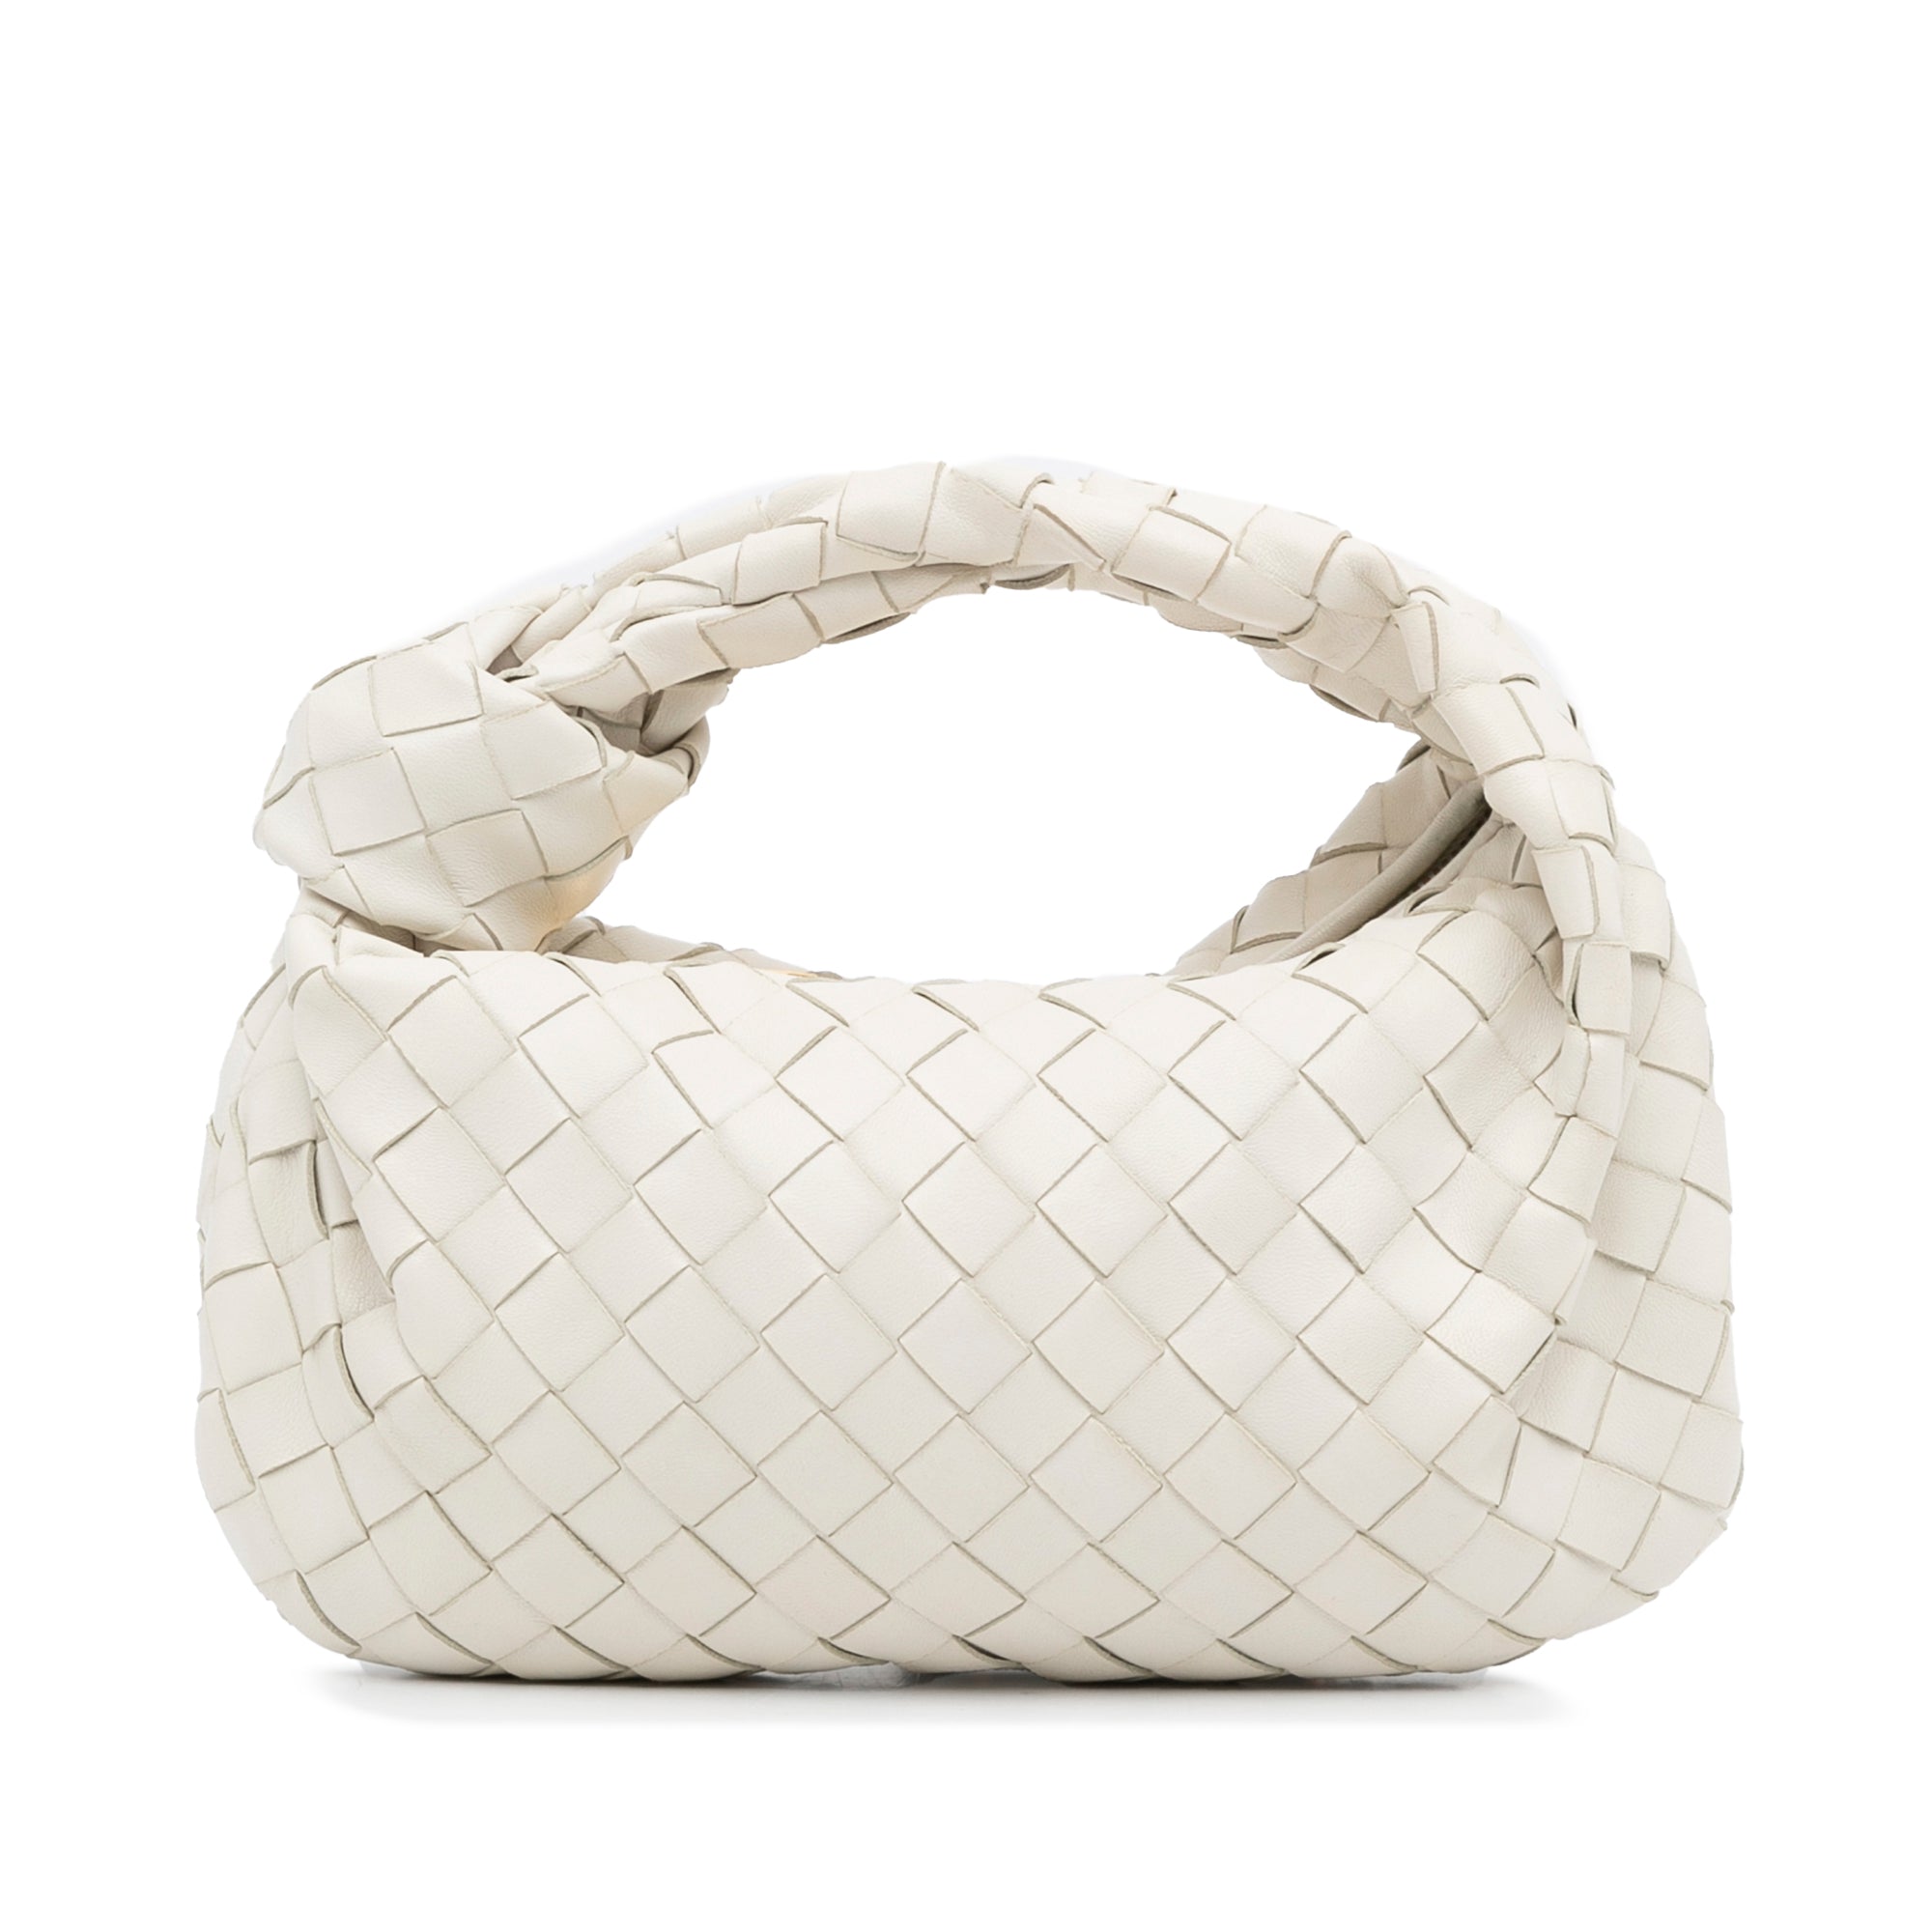 Bottega Veneta Women's Small Jodie Leather Hobo Bag - White